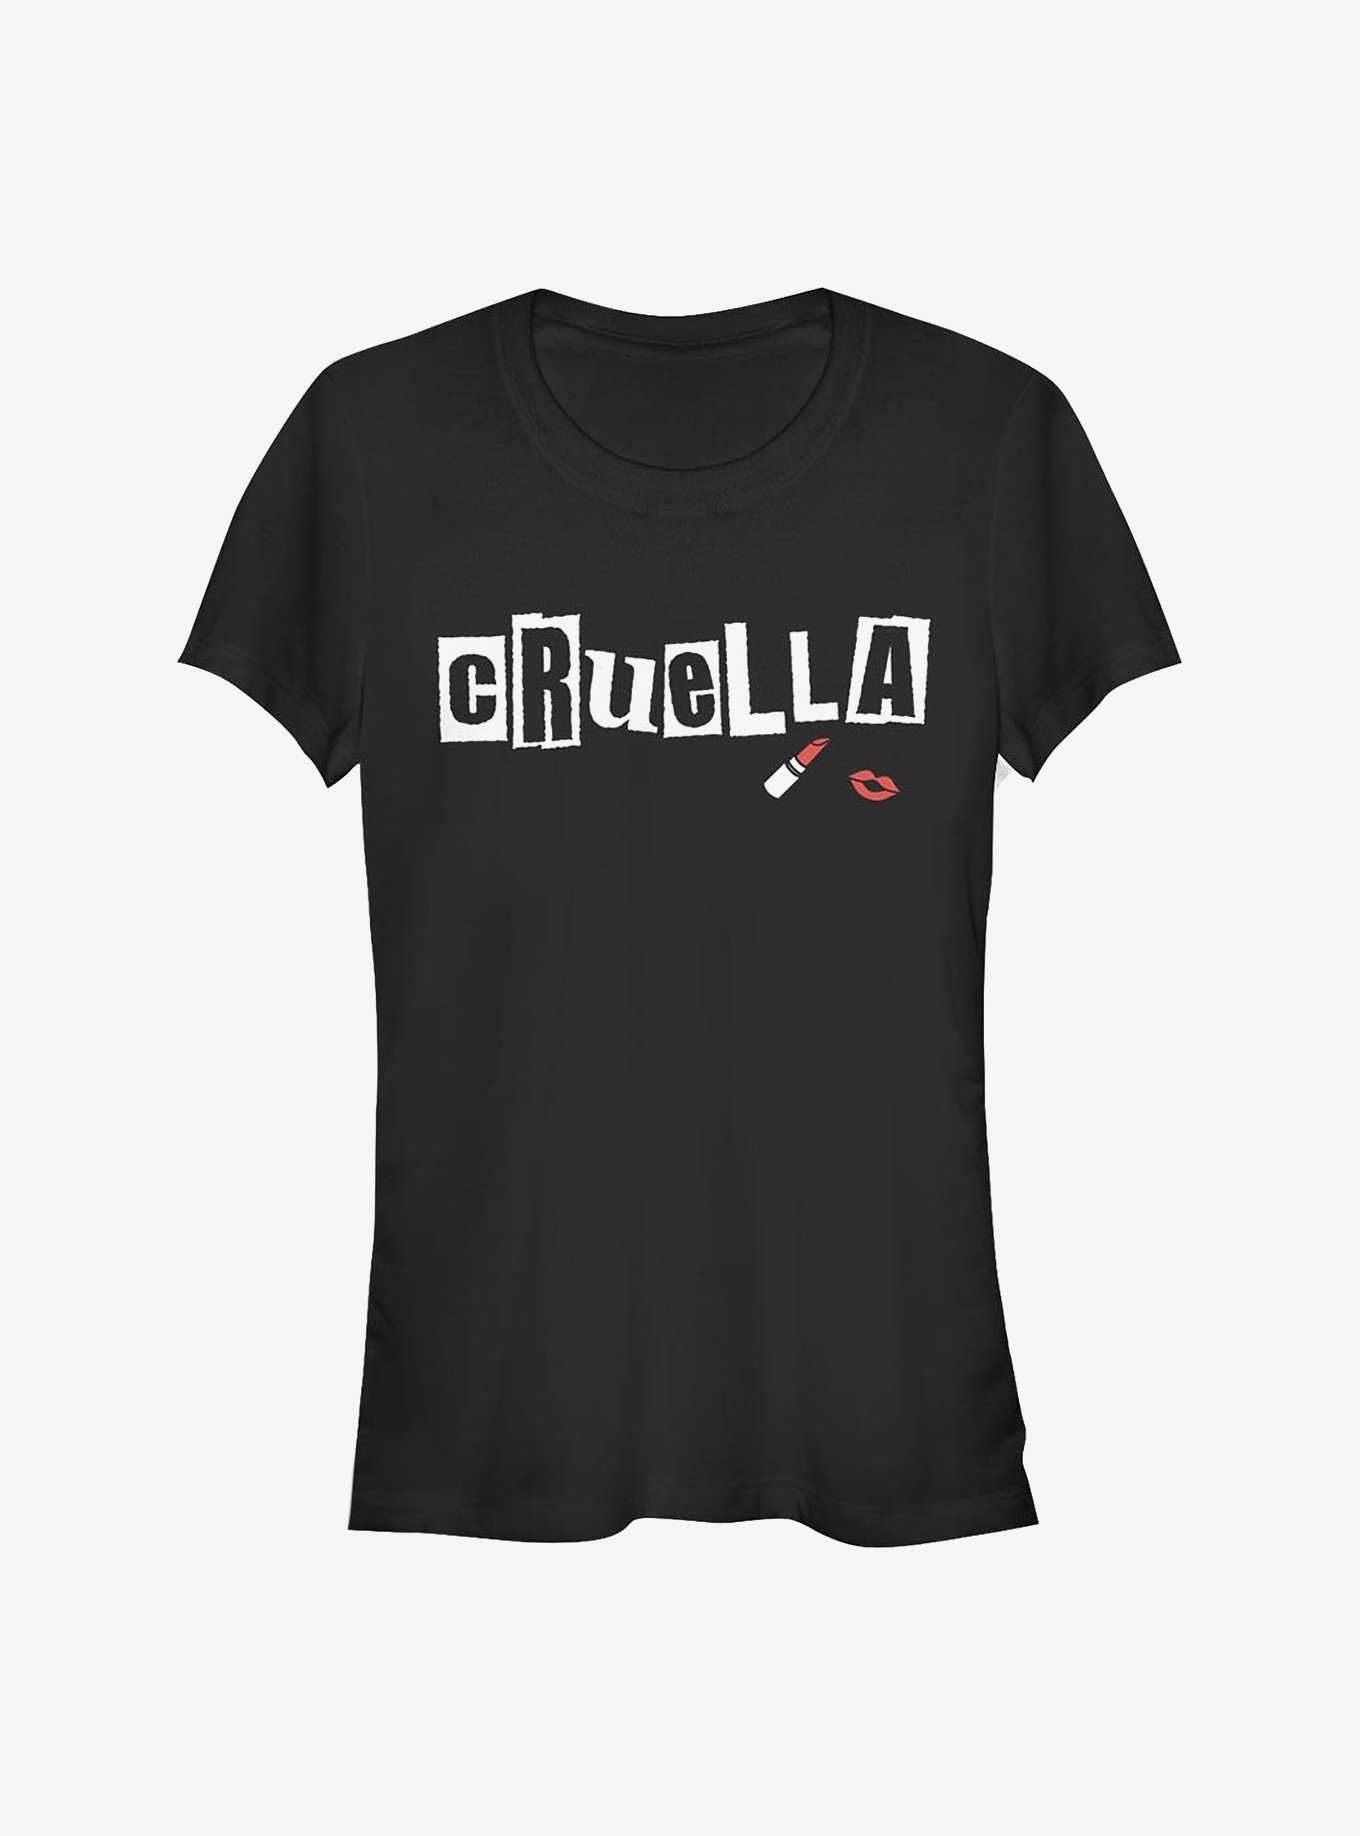 Disney Cruella Name Cut Out Letters Girls T-Shirt, , hi-res